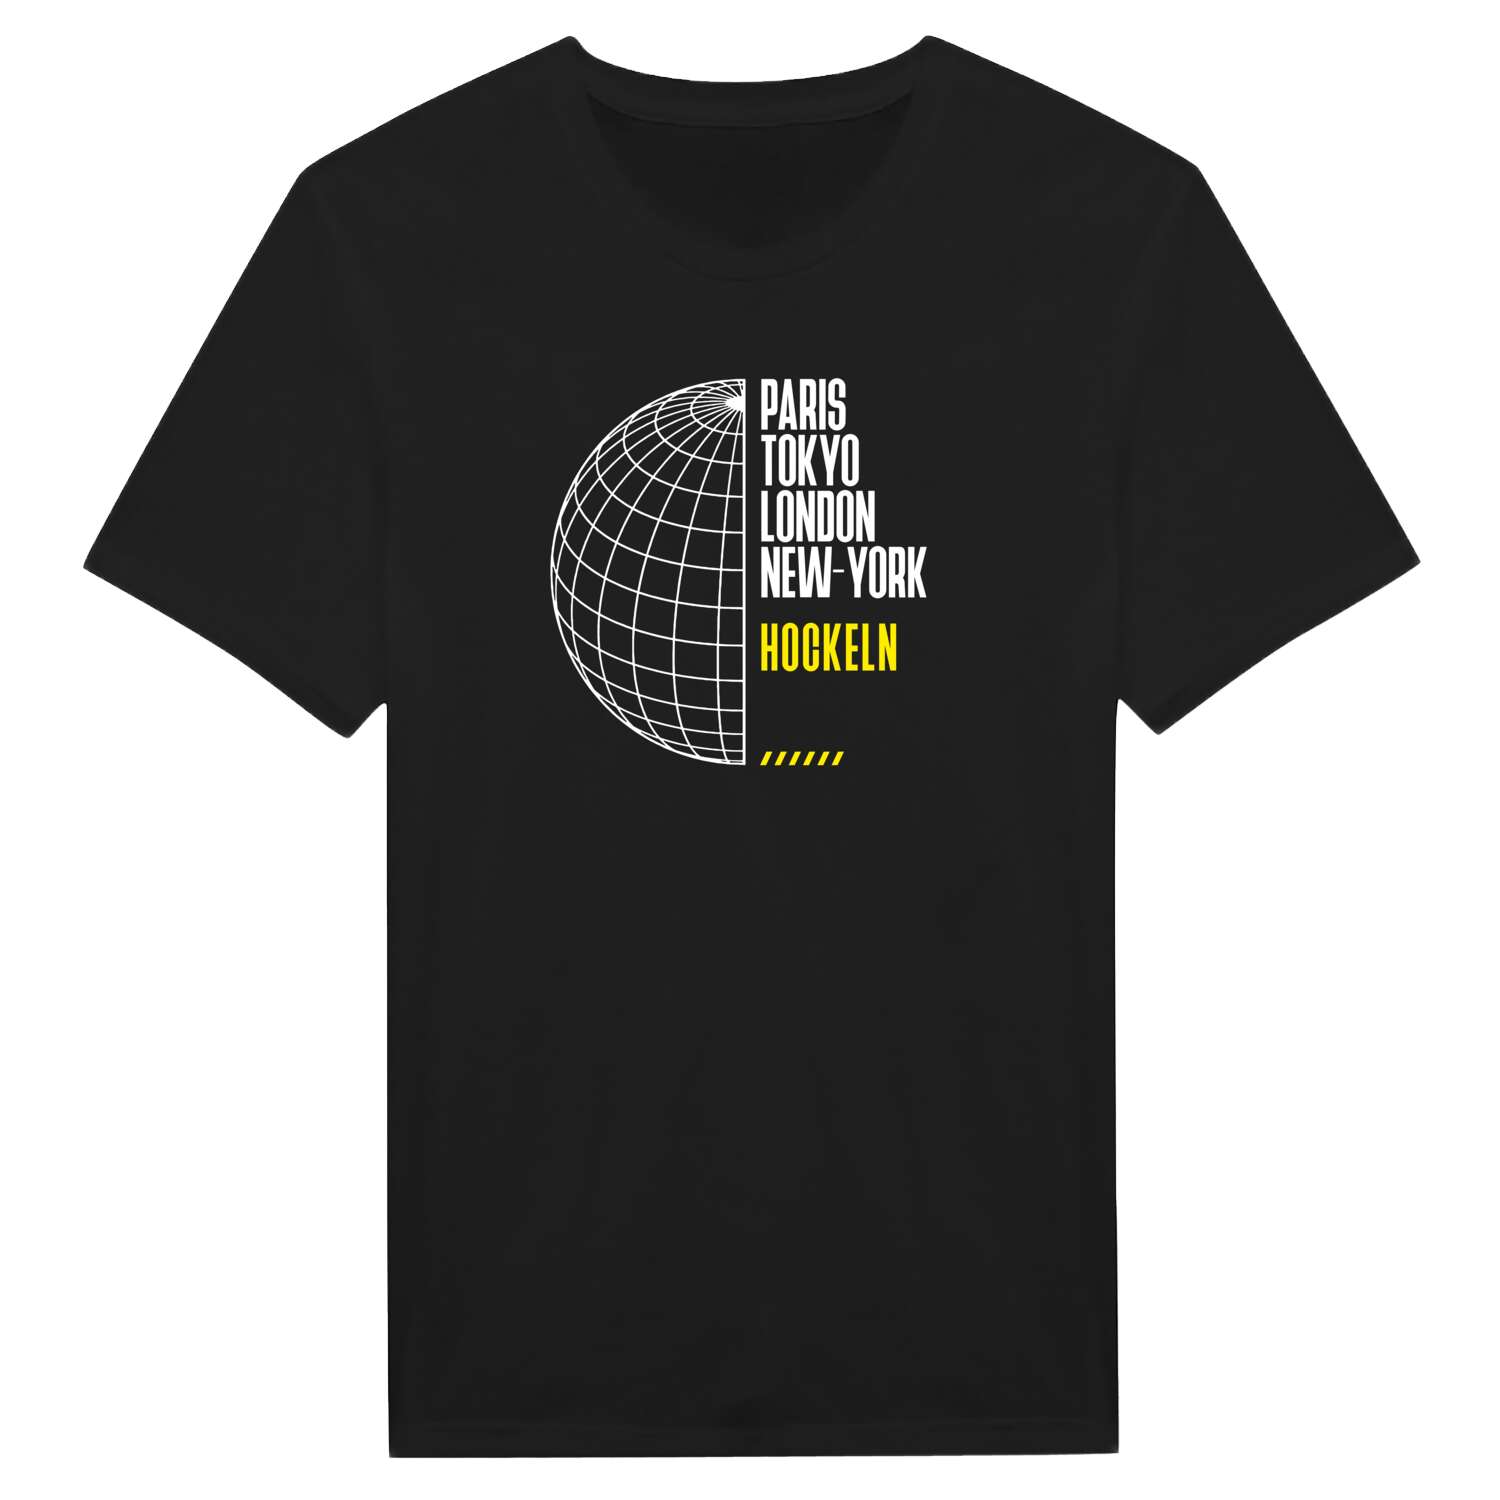 Hockeln T-Shirt »Paris Tokyo London«